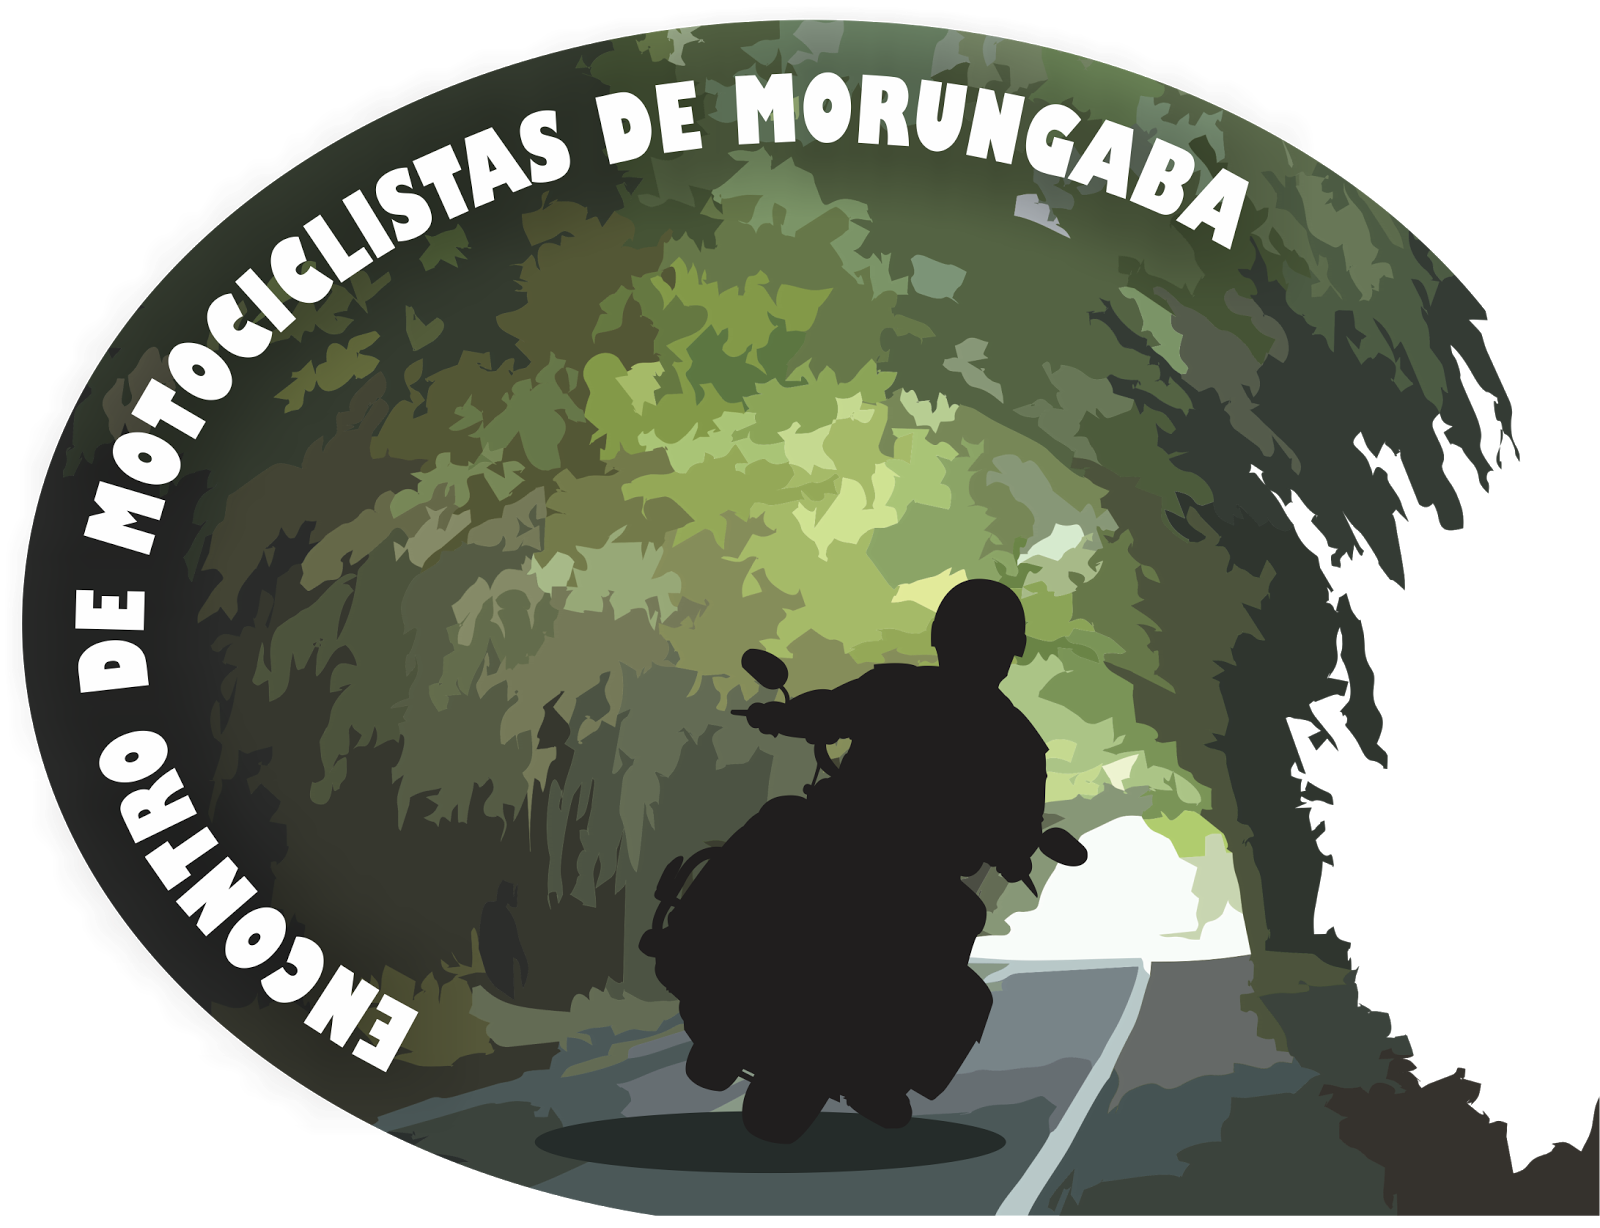 Encontro de Motociclistas de Morungaba